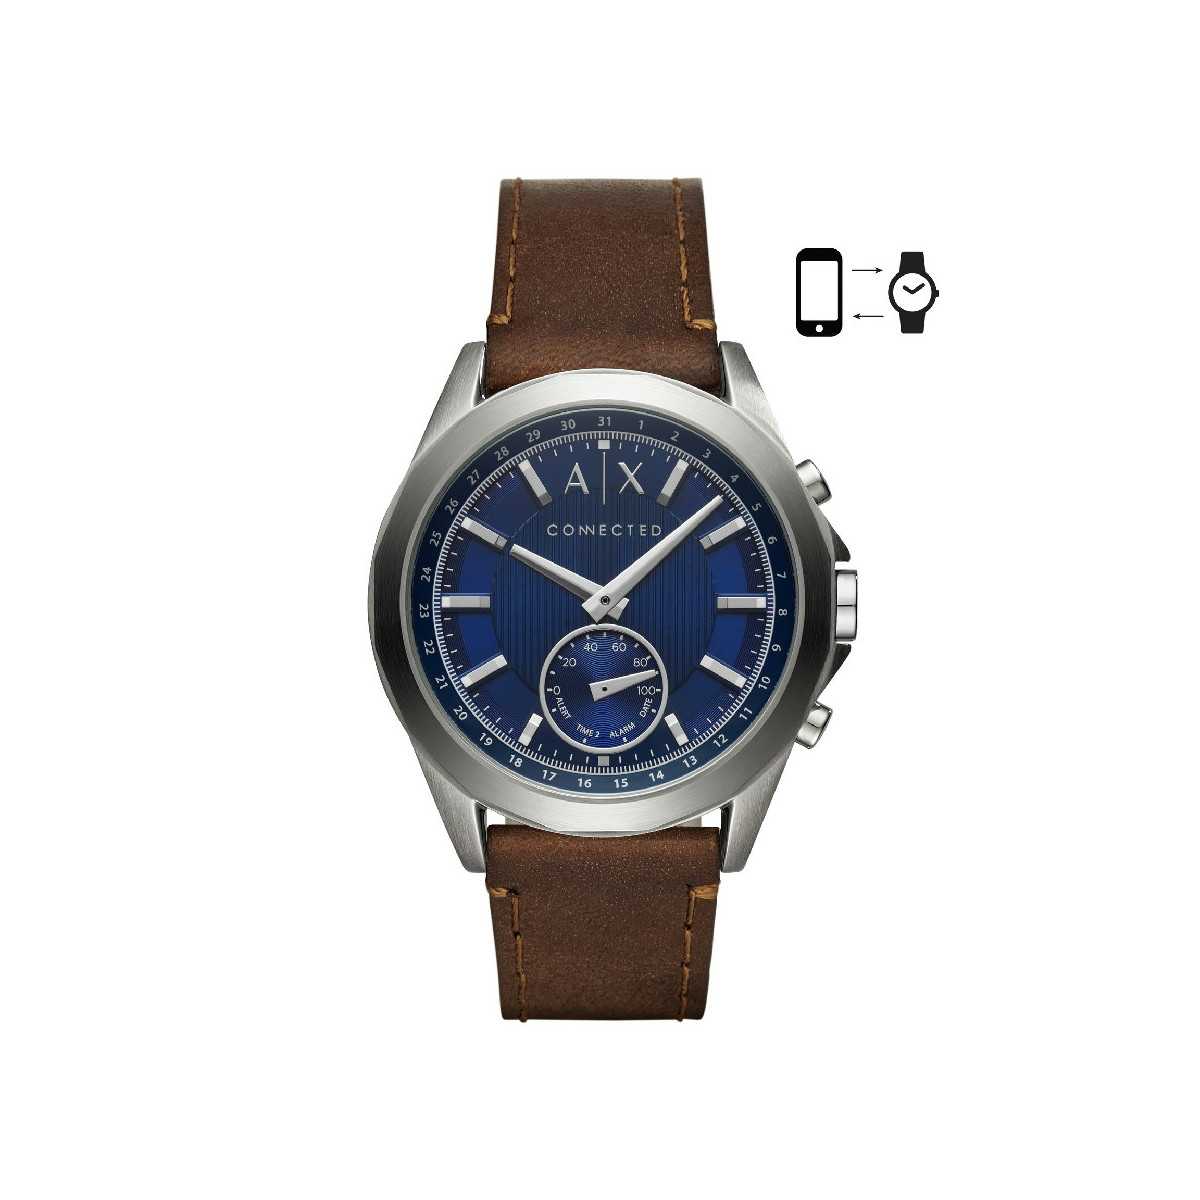 Reloj Armani Exchange Connected AXT1010